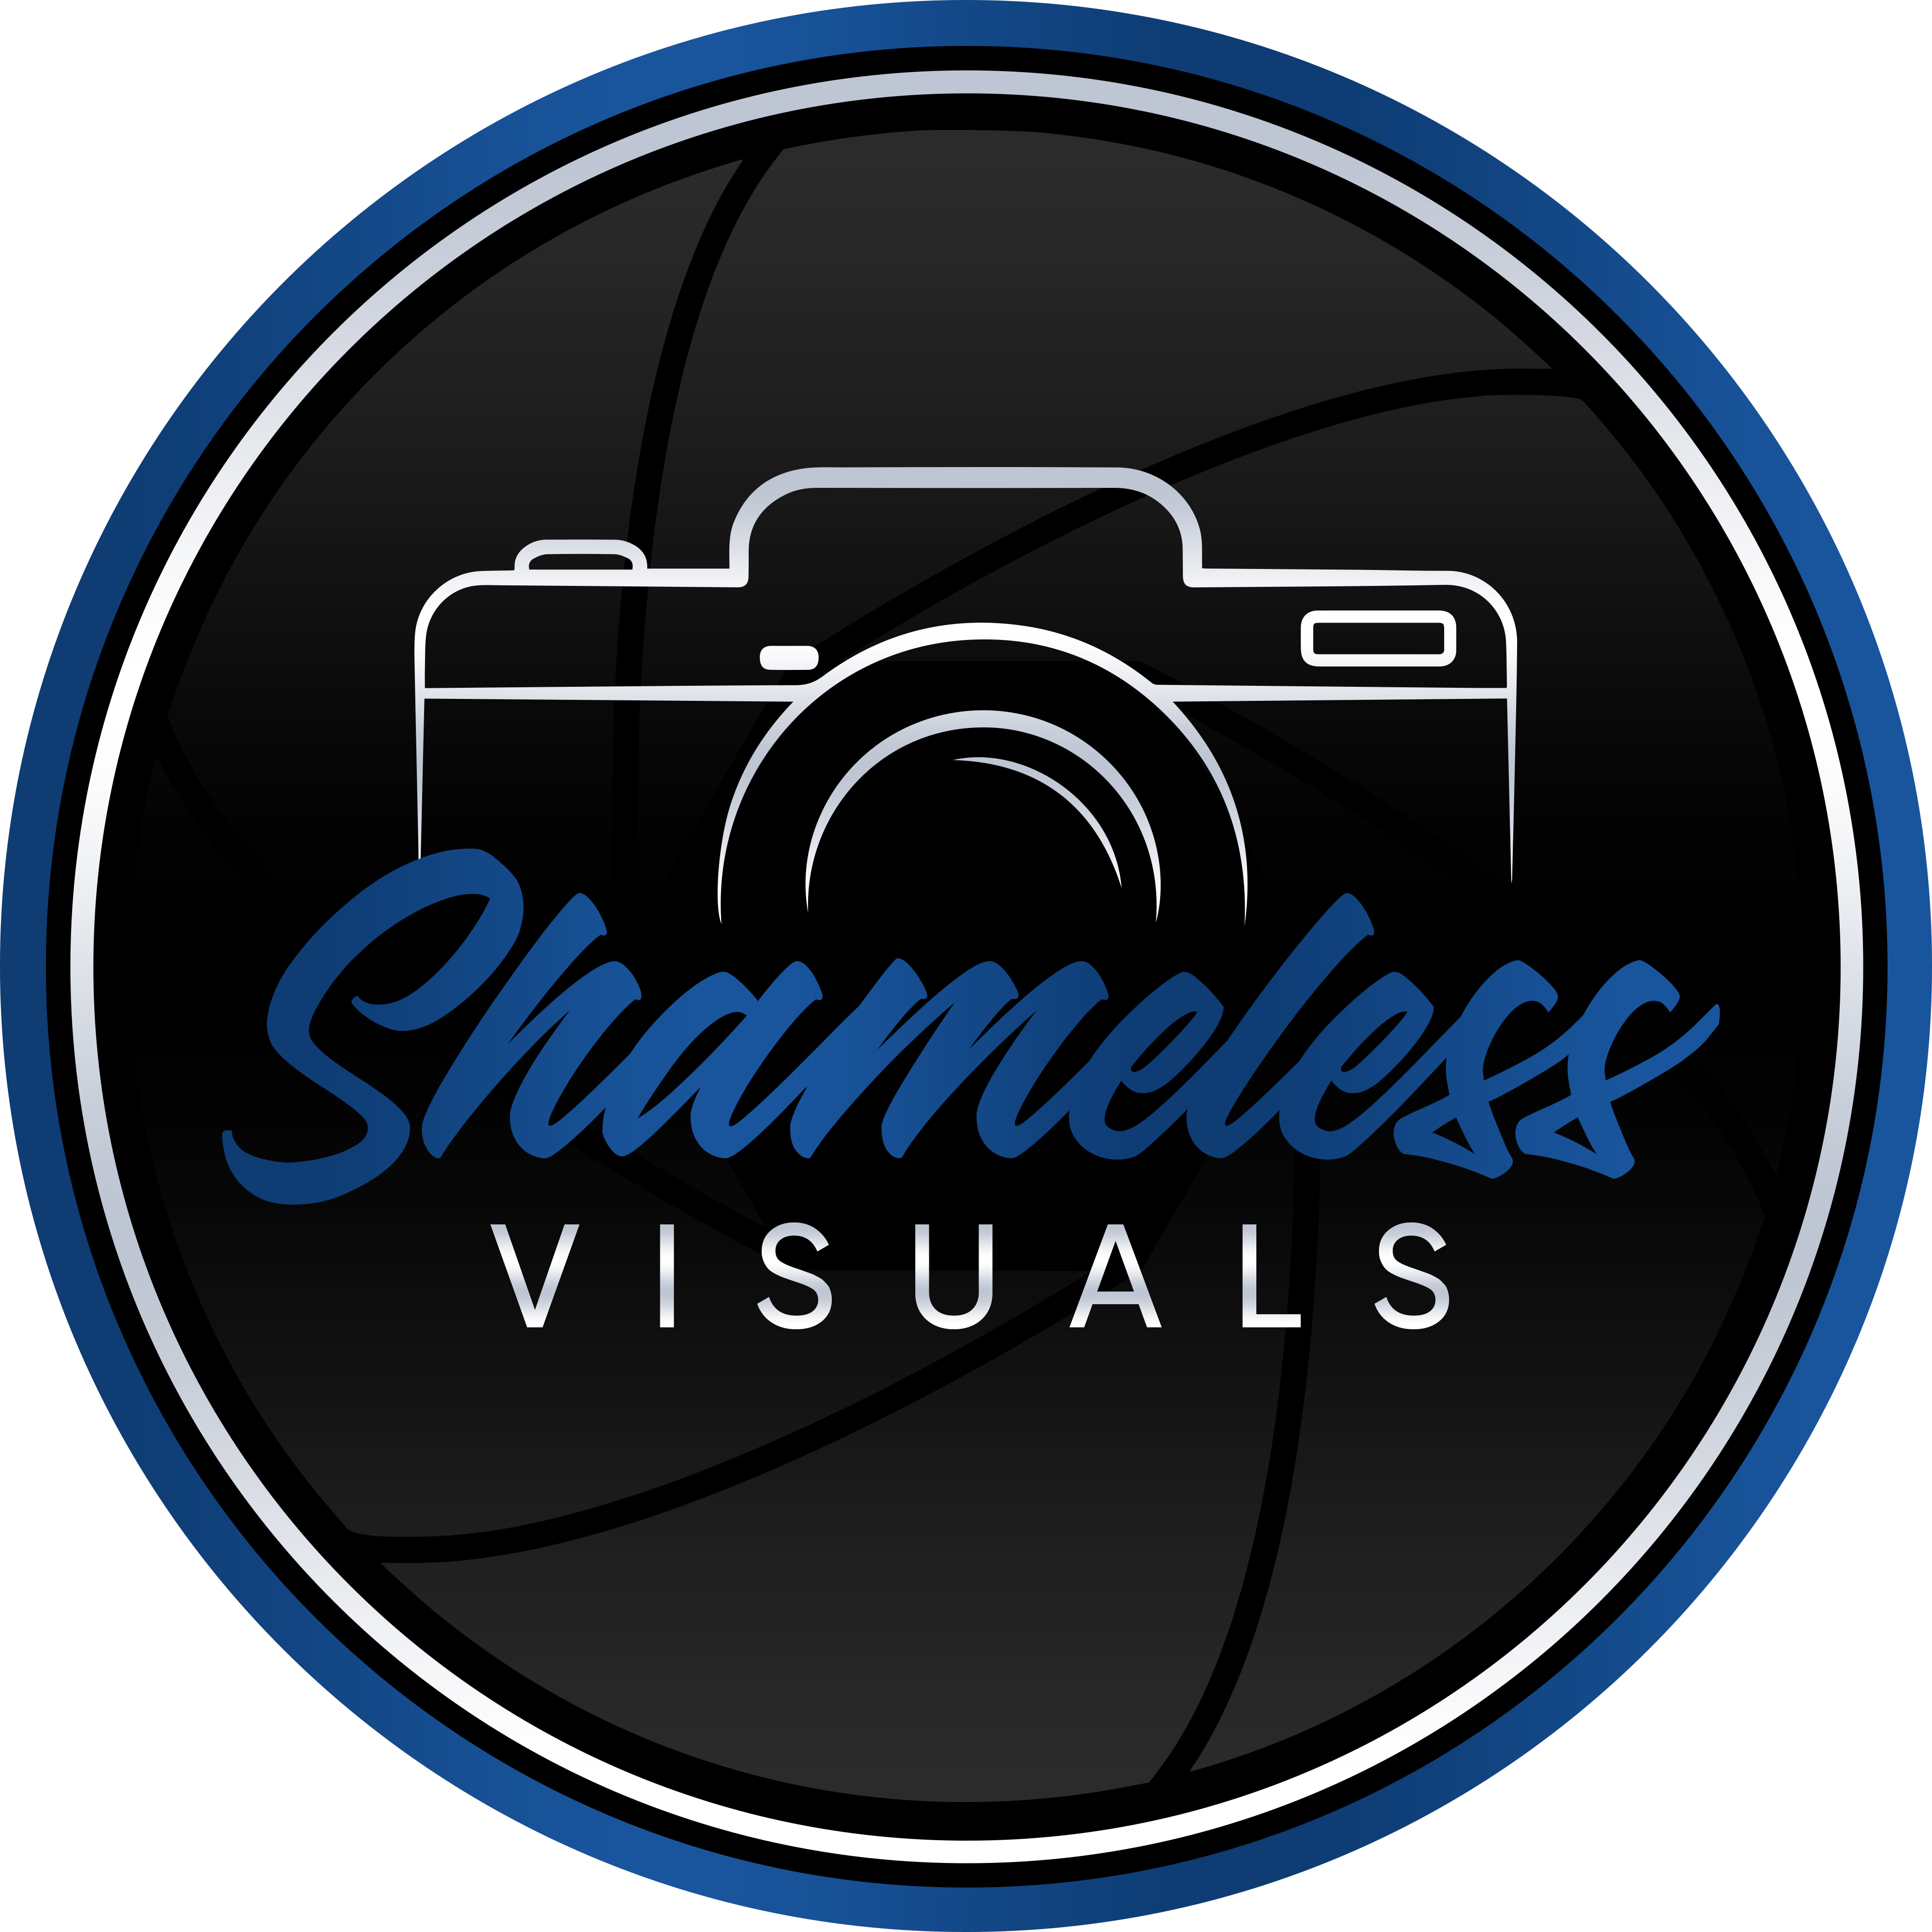 Shameless Visuals logo with a camera icon.